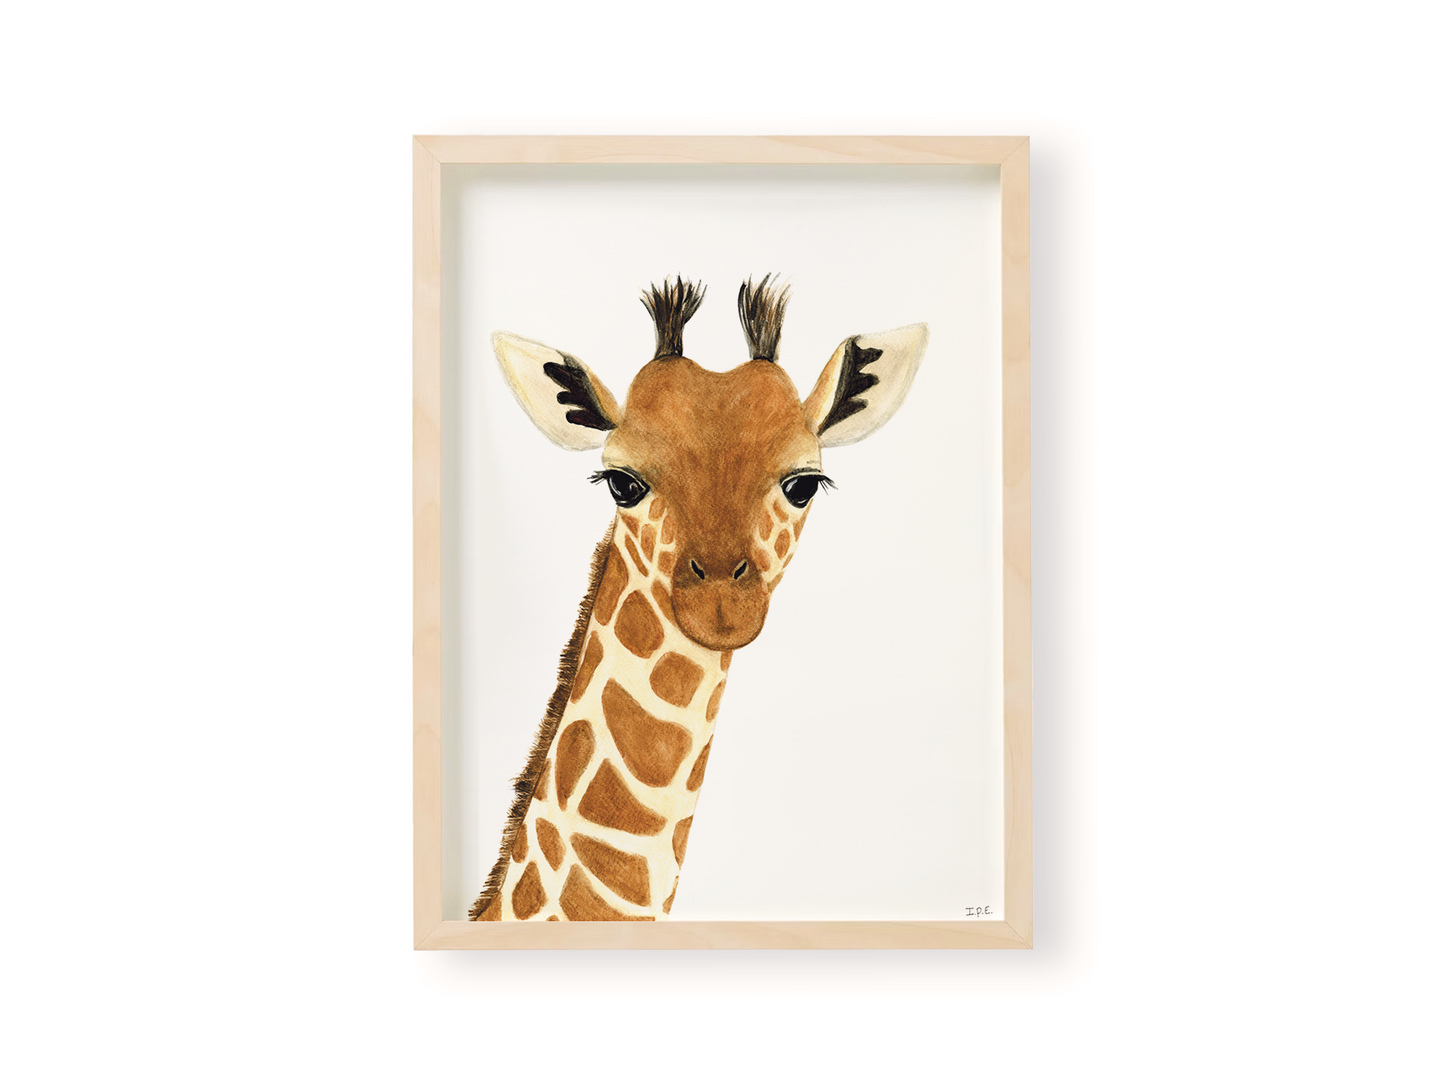 Giraffe nursery wall art print in wooden frame